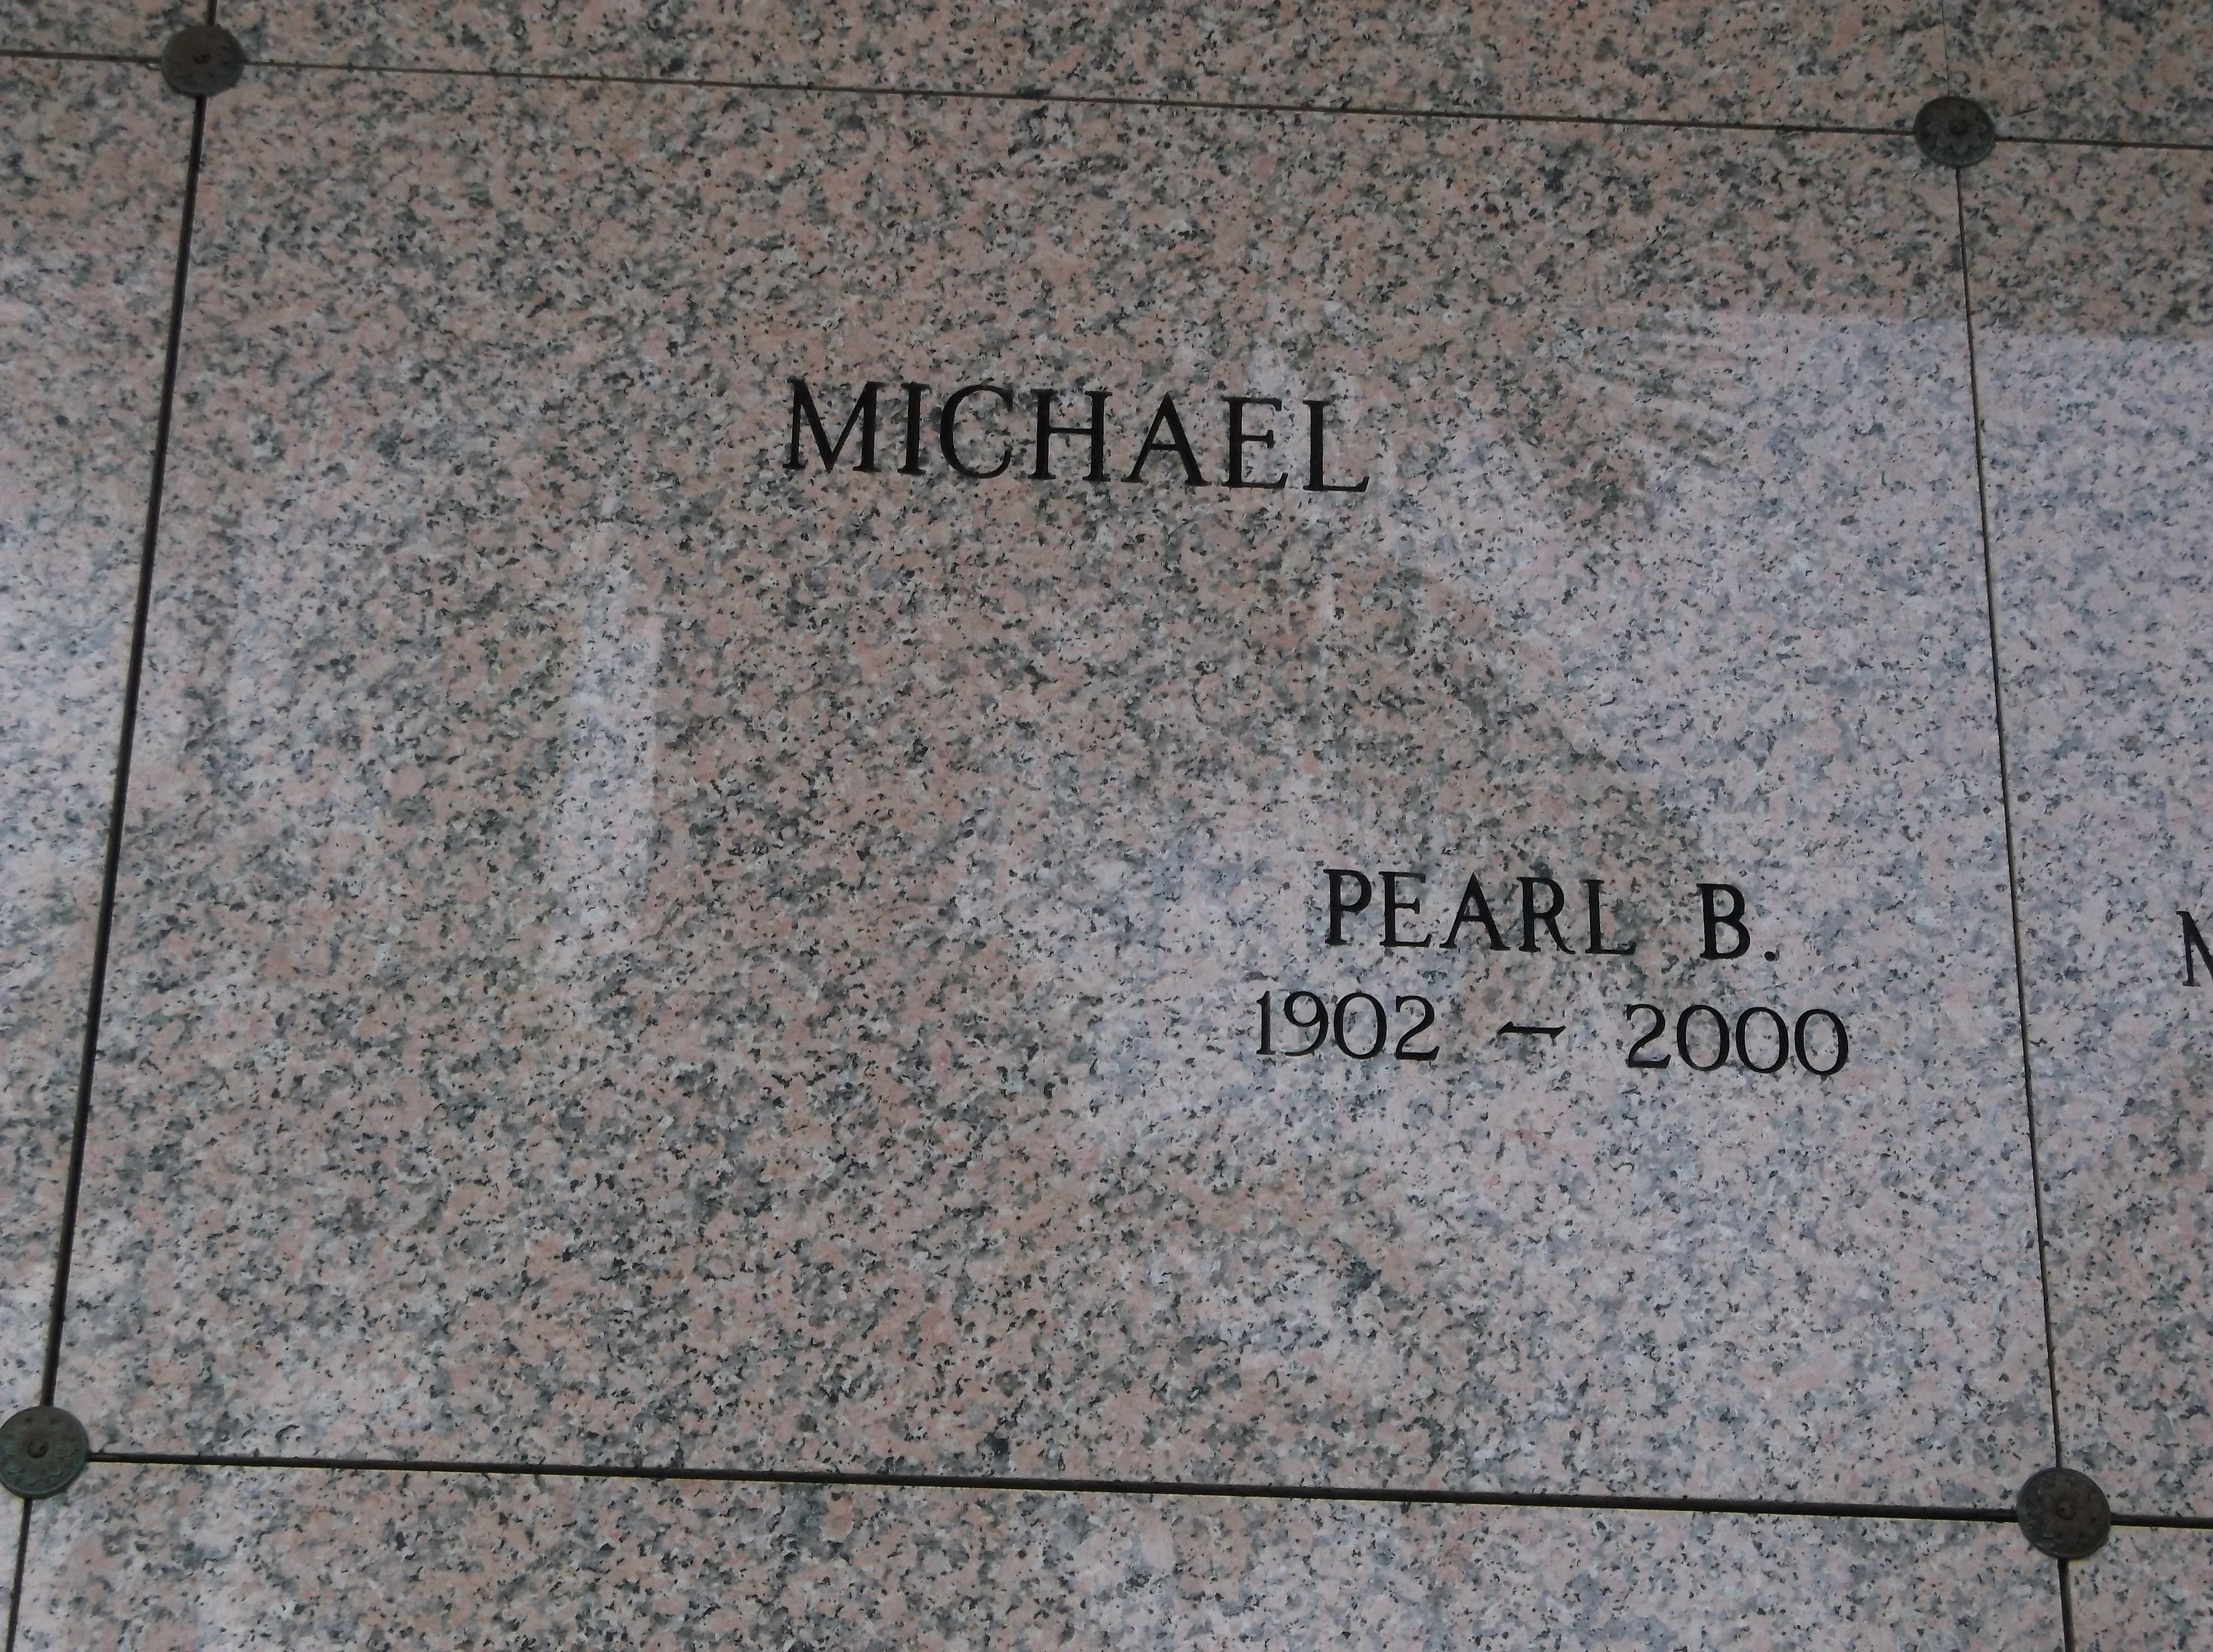 Pearl B Michael